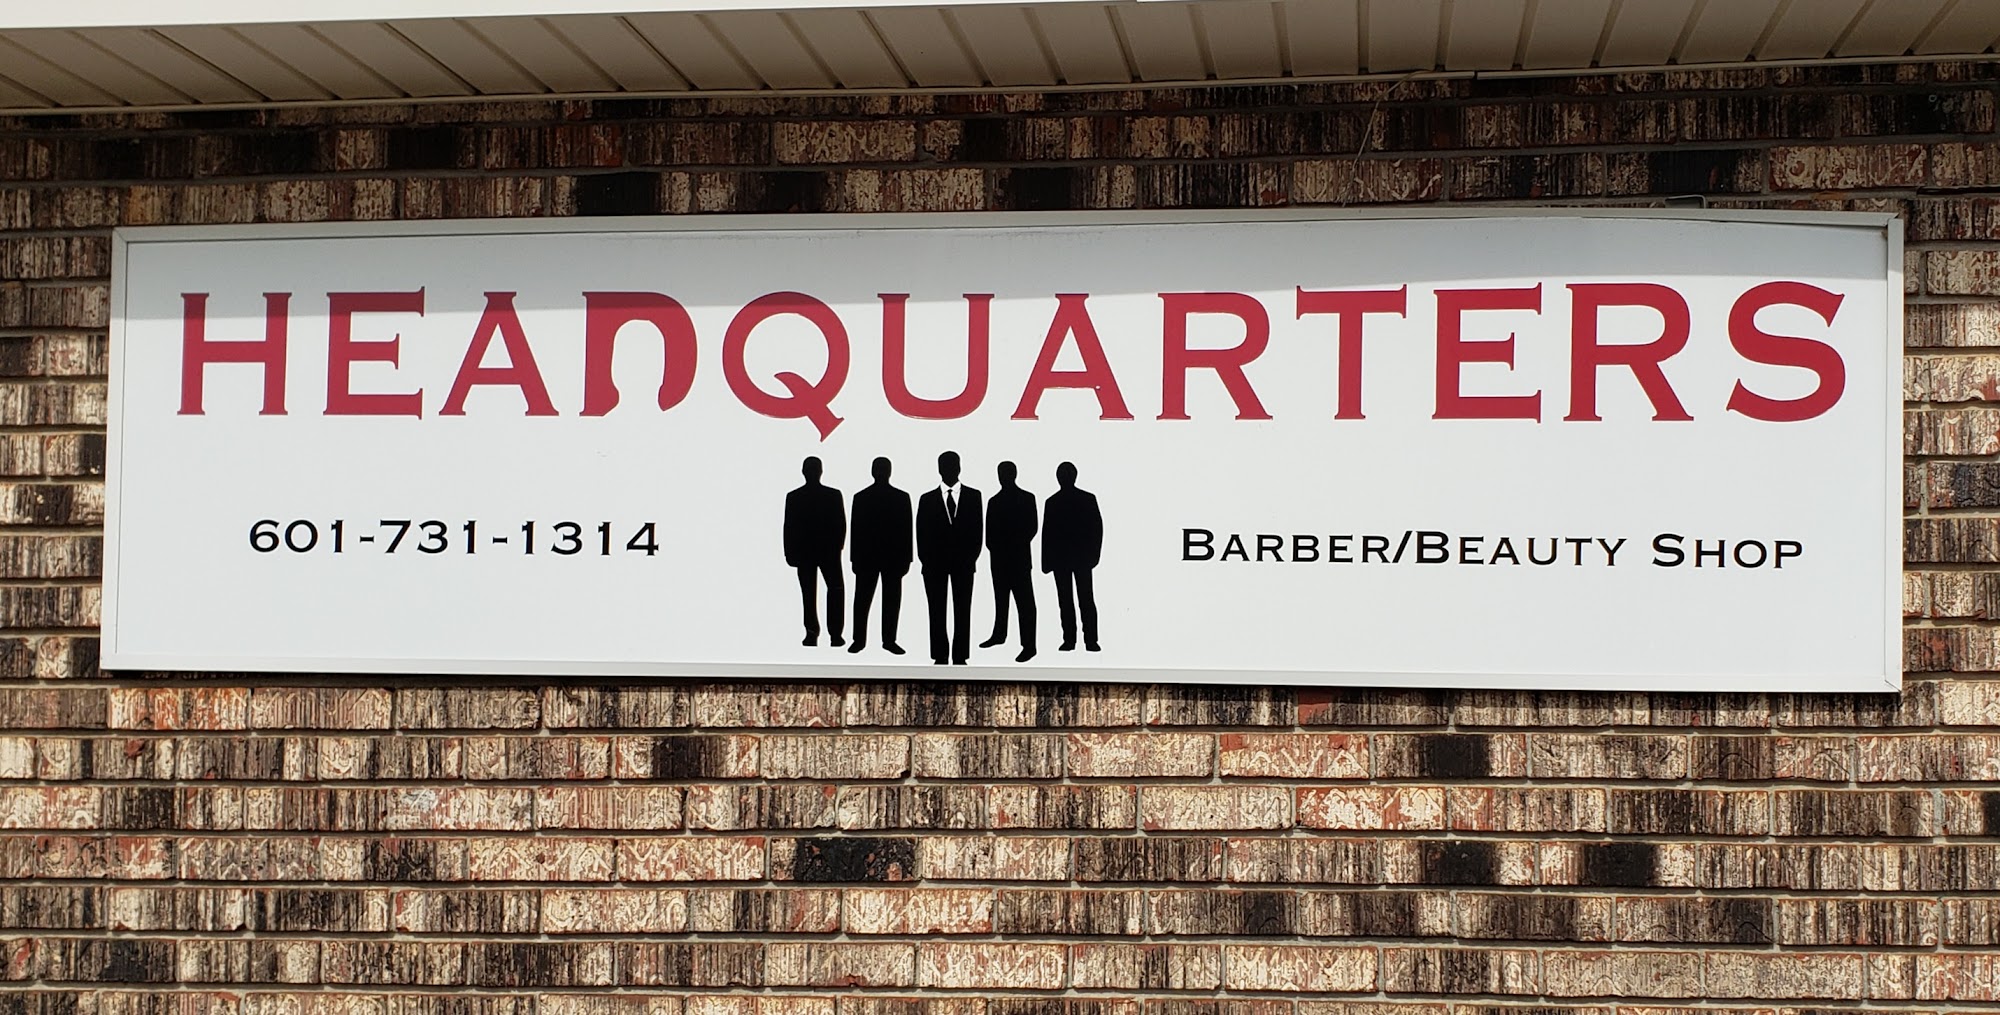 Headquarter's Barber Shop MS-587, Foxworth Mississippi 39483